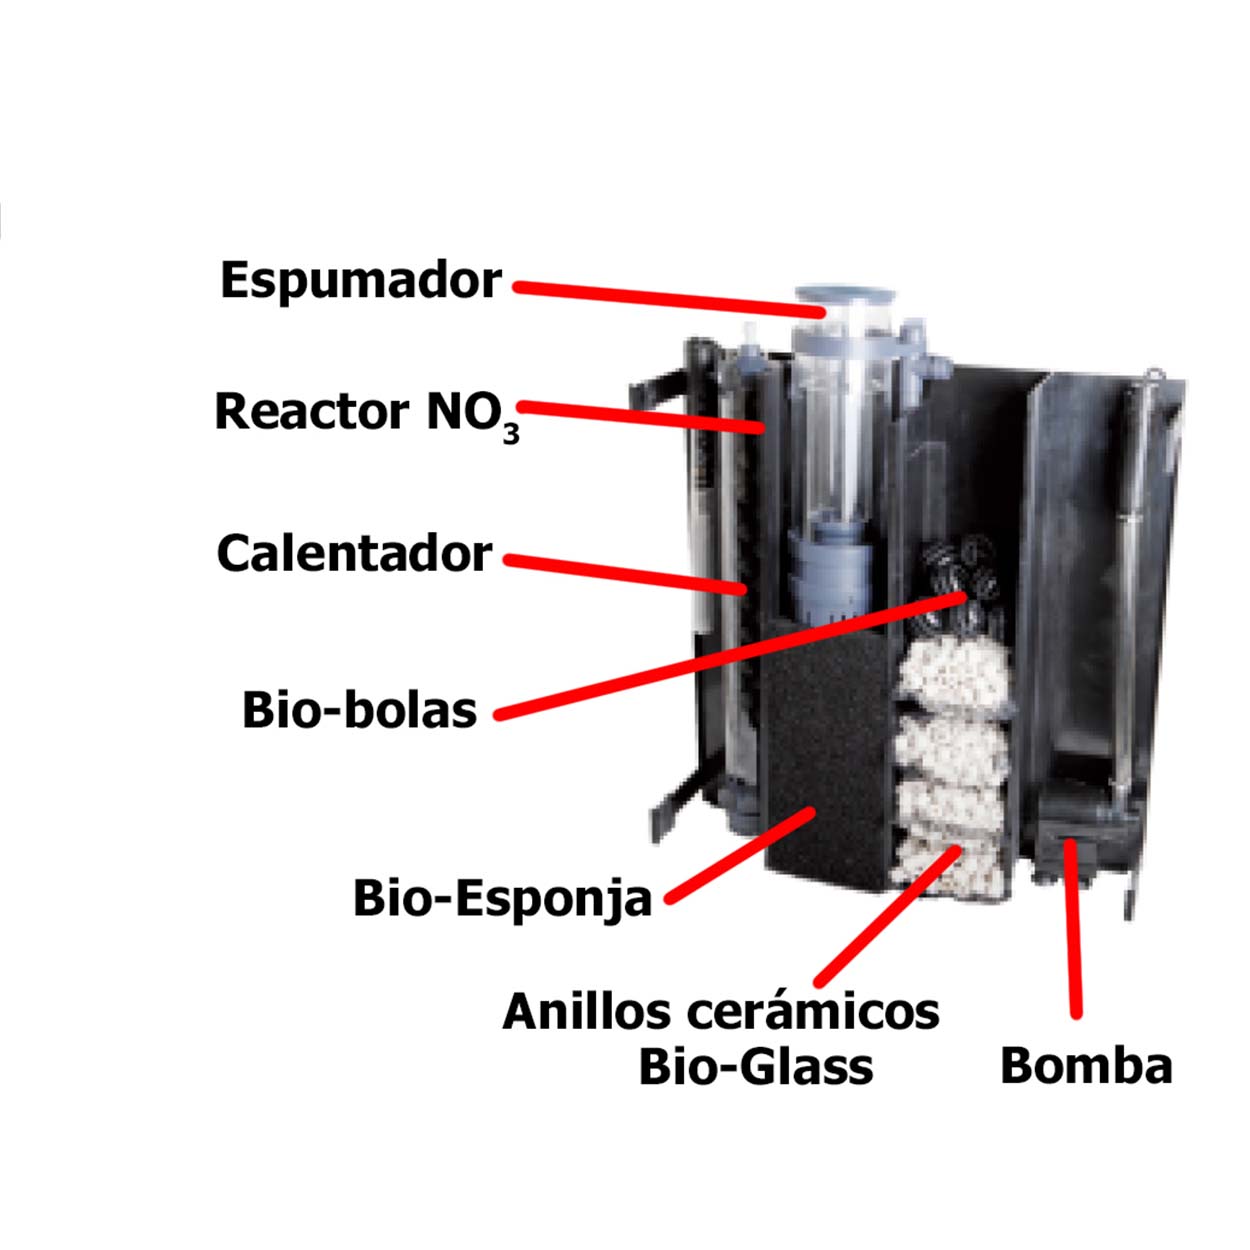 Reactor de CO2 externo a contracorriente ISTA compacto